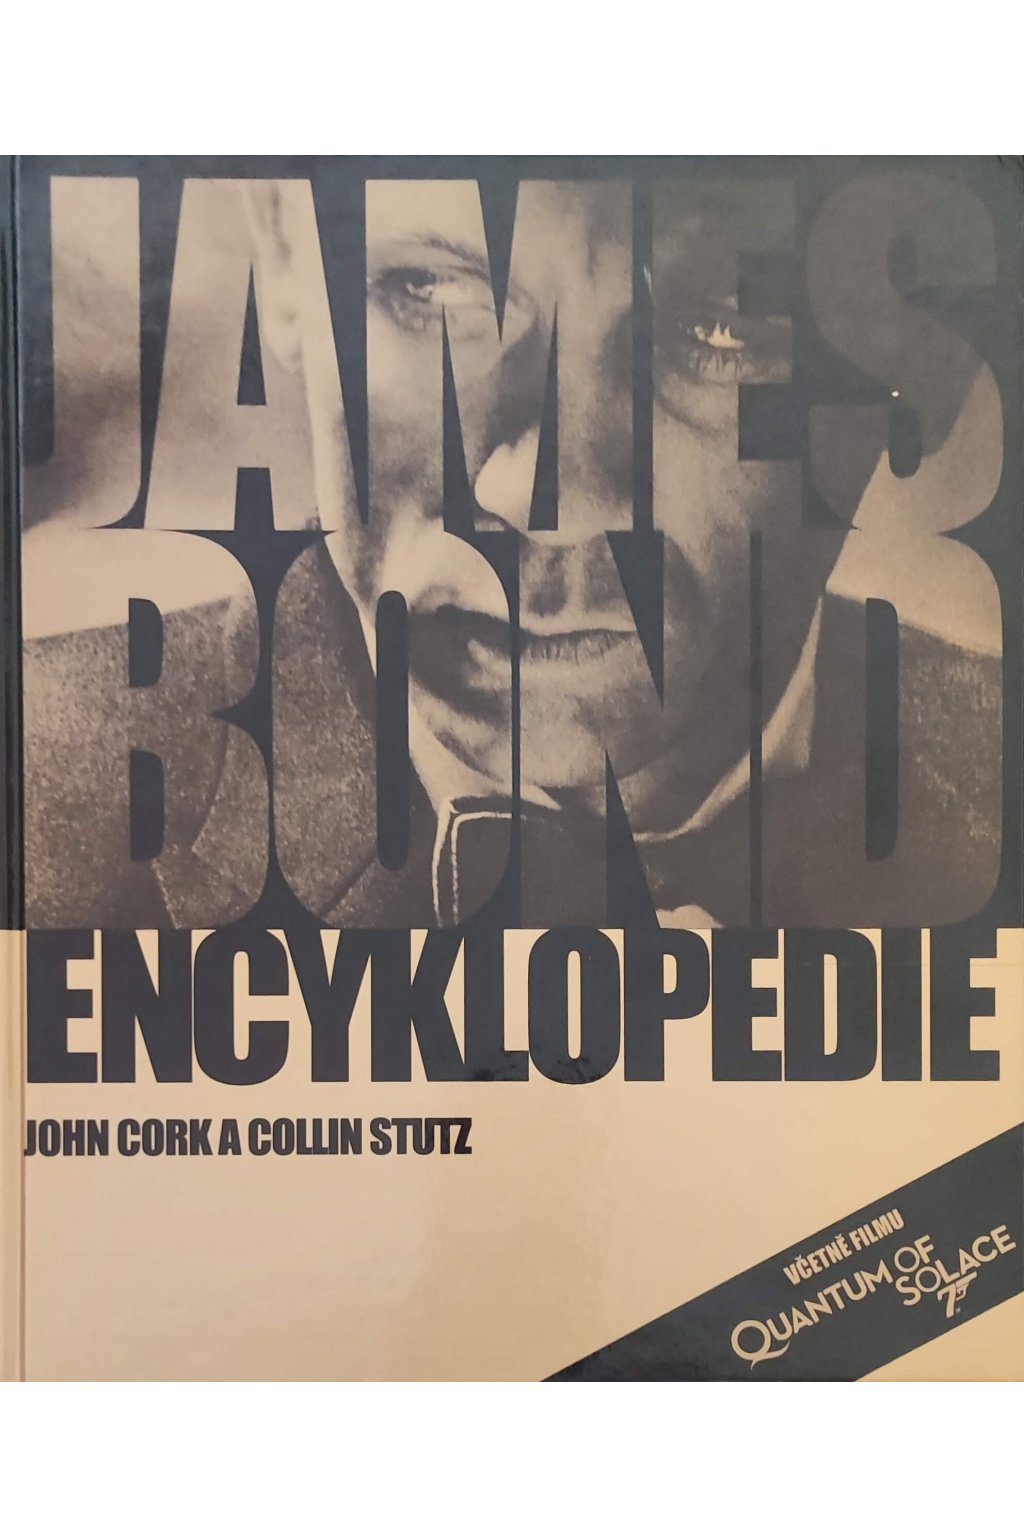 James Bond- Encyklopedie